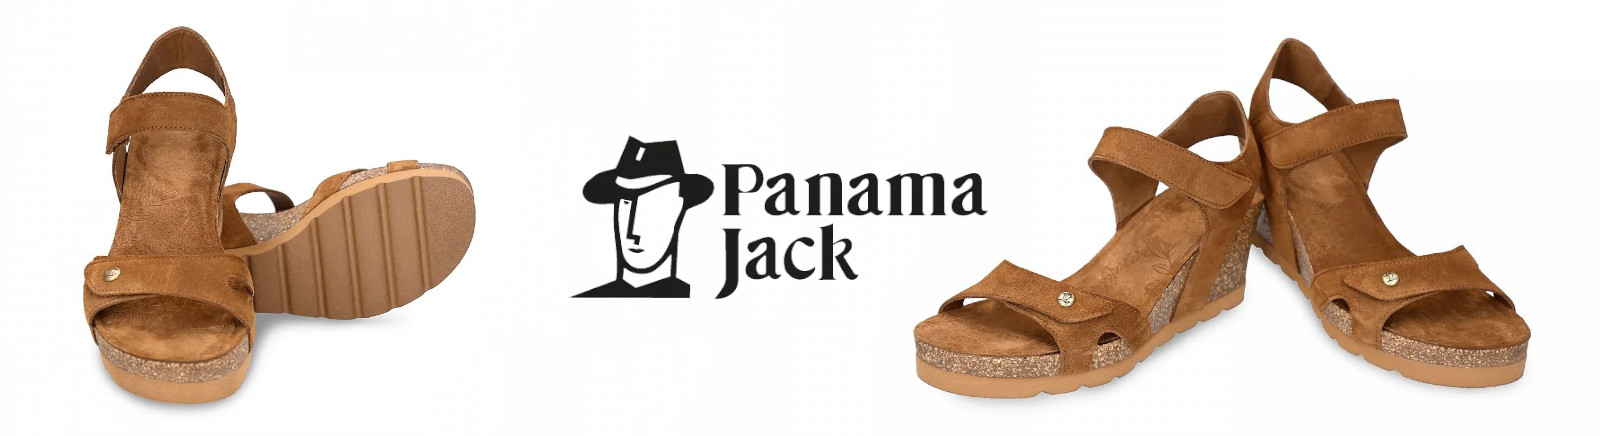 Prange: Panama Jack Sandalen für Herren online shoppen